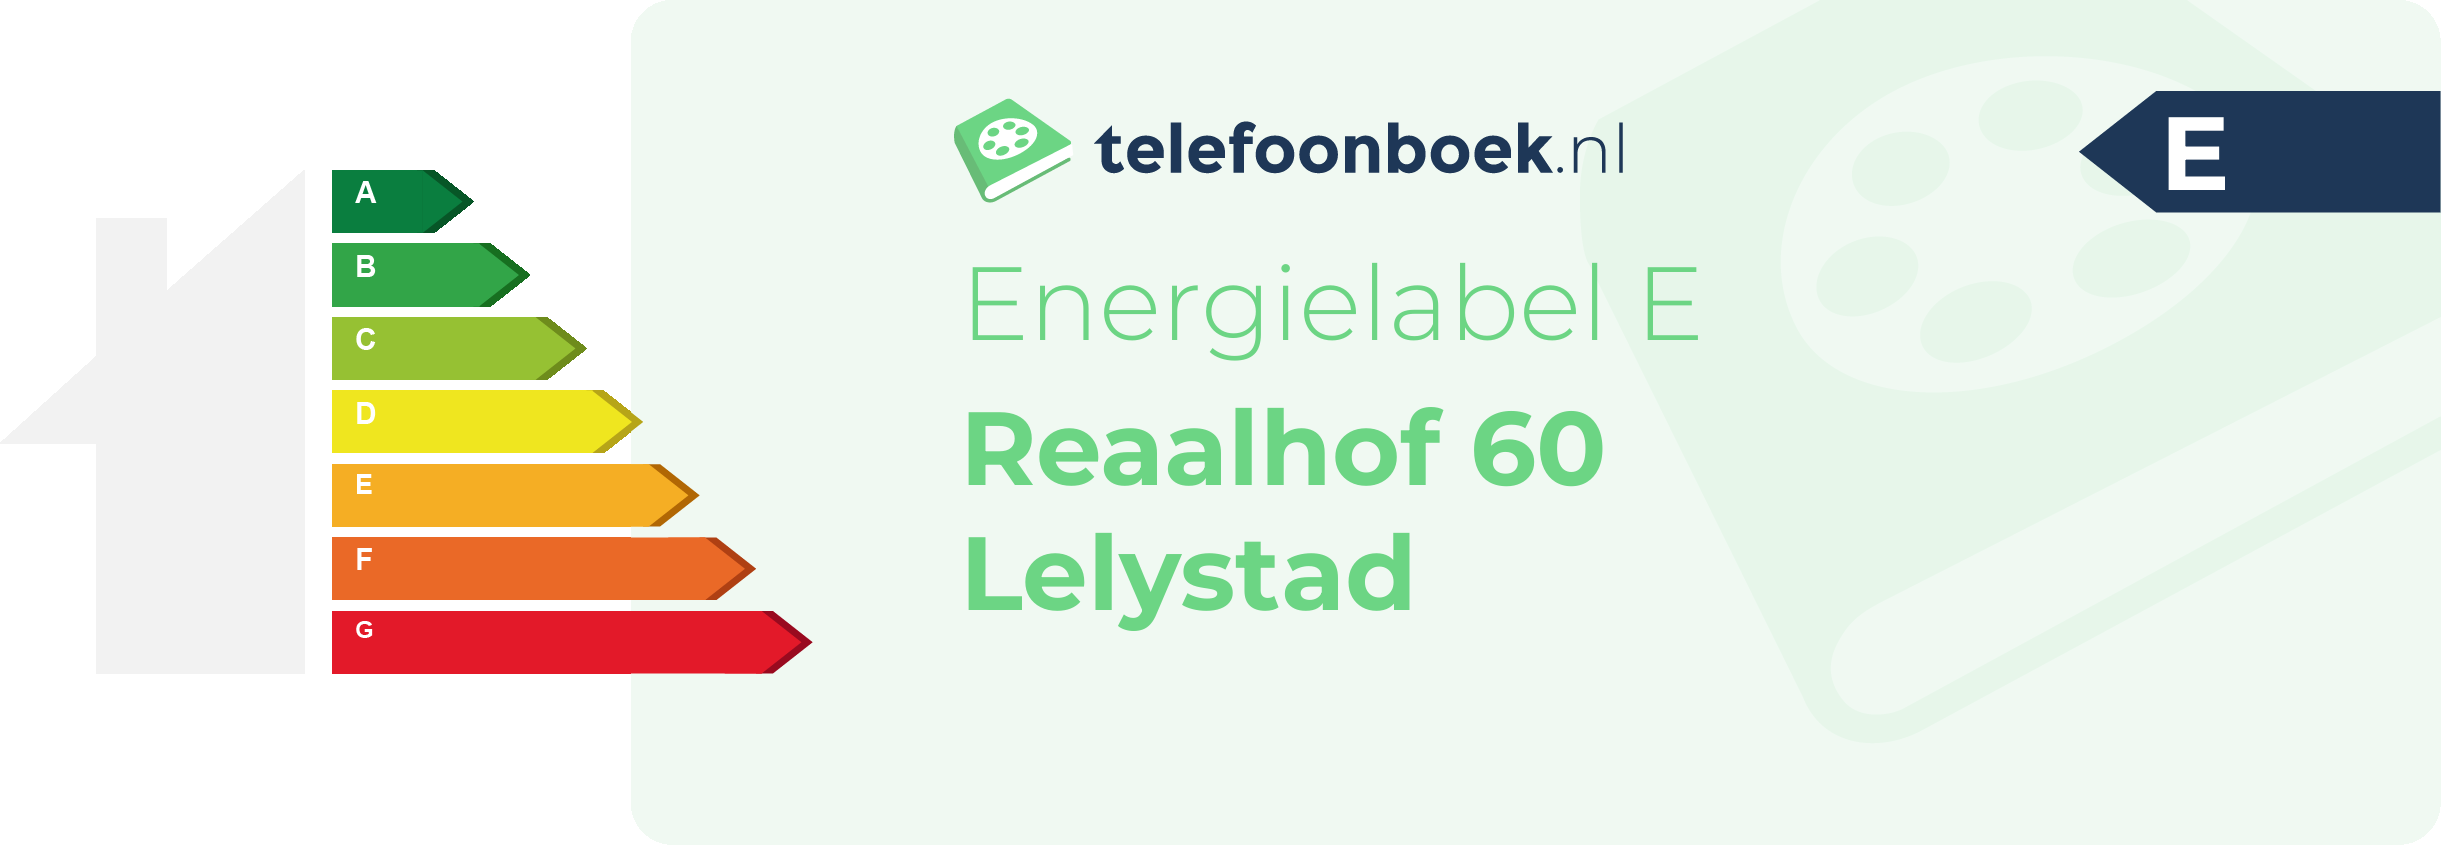 Energielabel Reaalhof 60 Lelystad